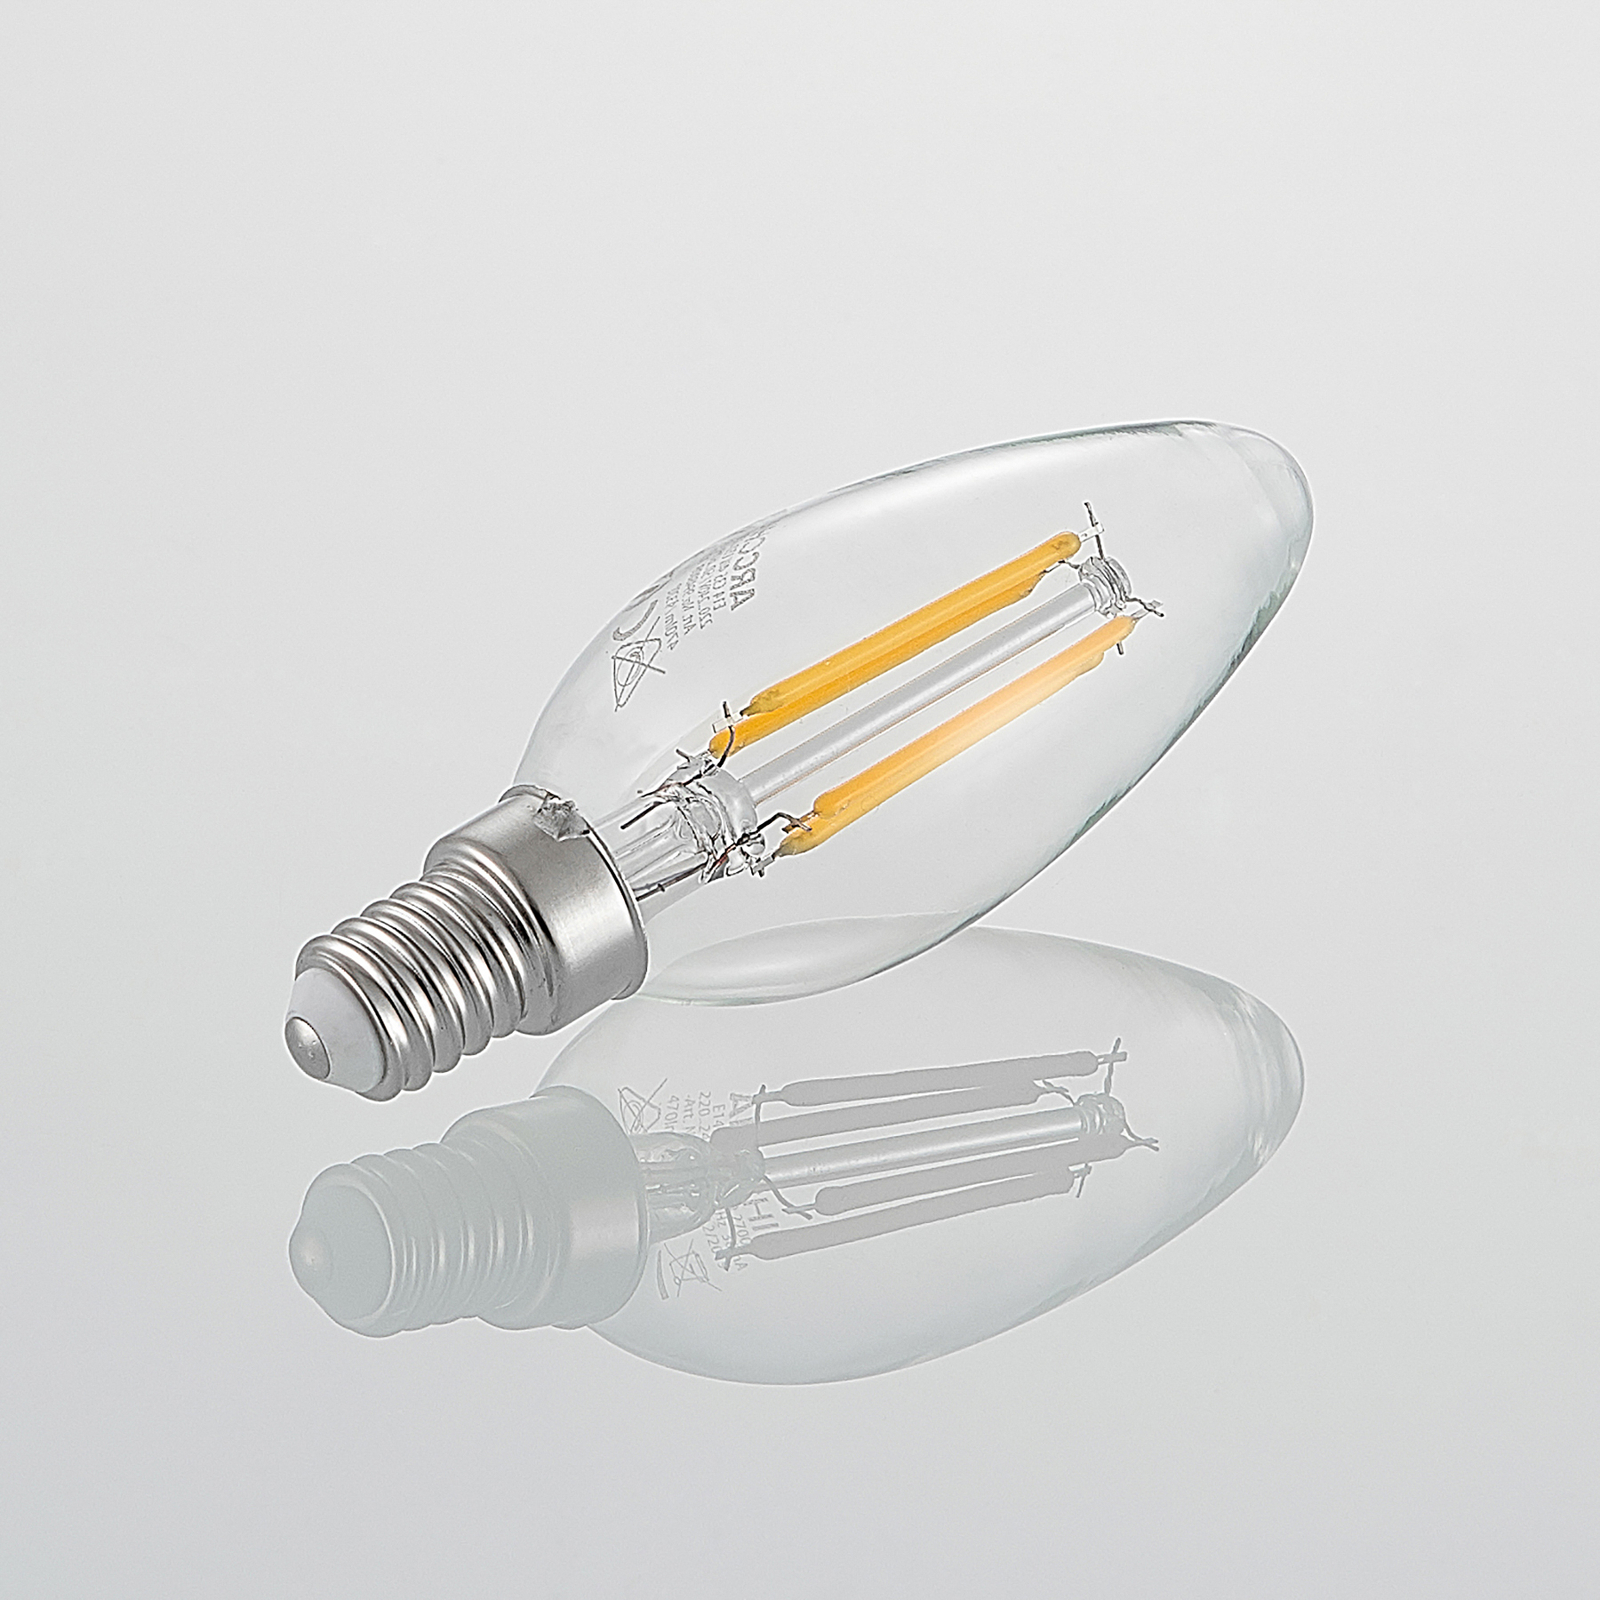 LED-filamentpære E14 4 W 827 3-trins-dæmper, 3 stk